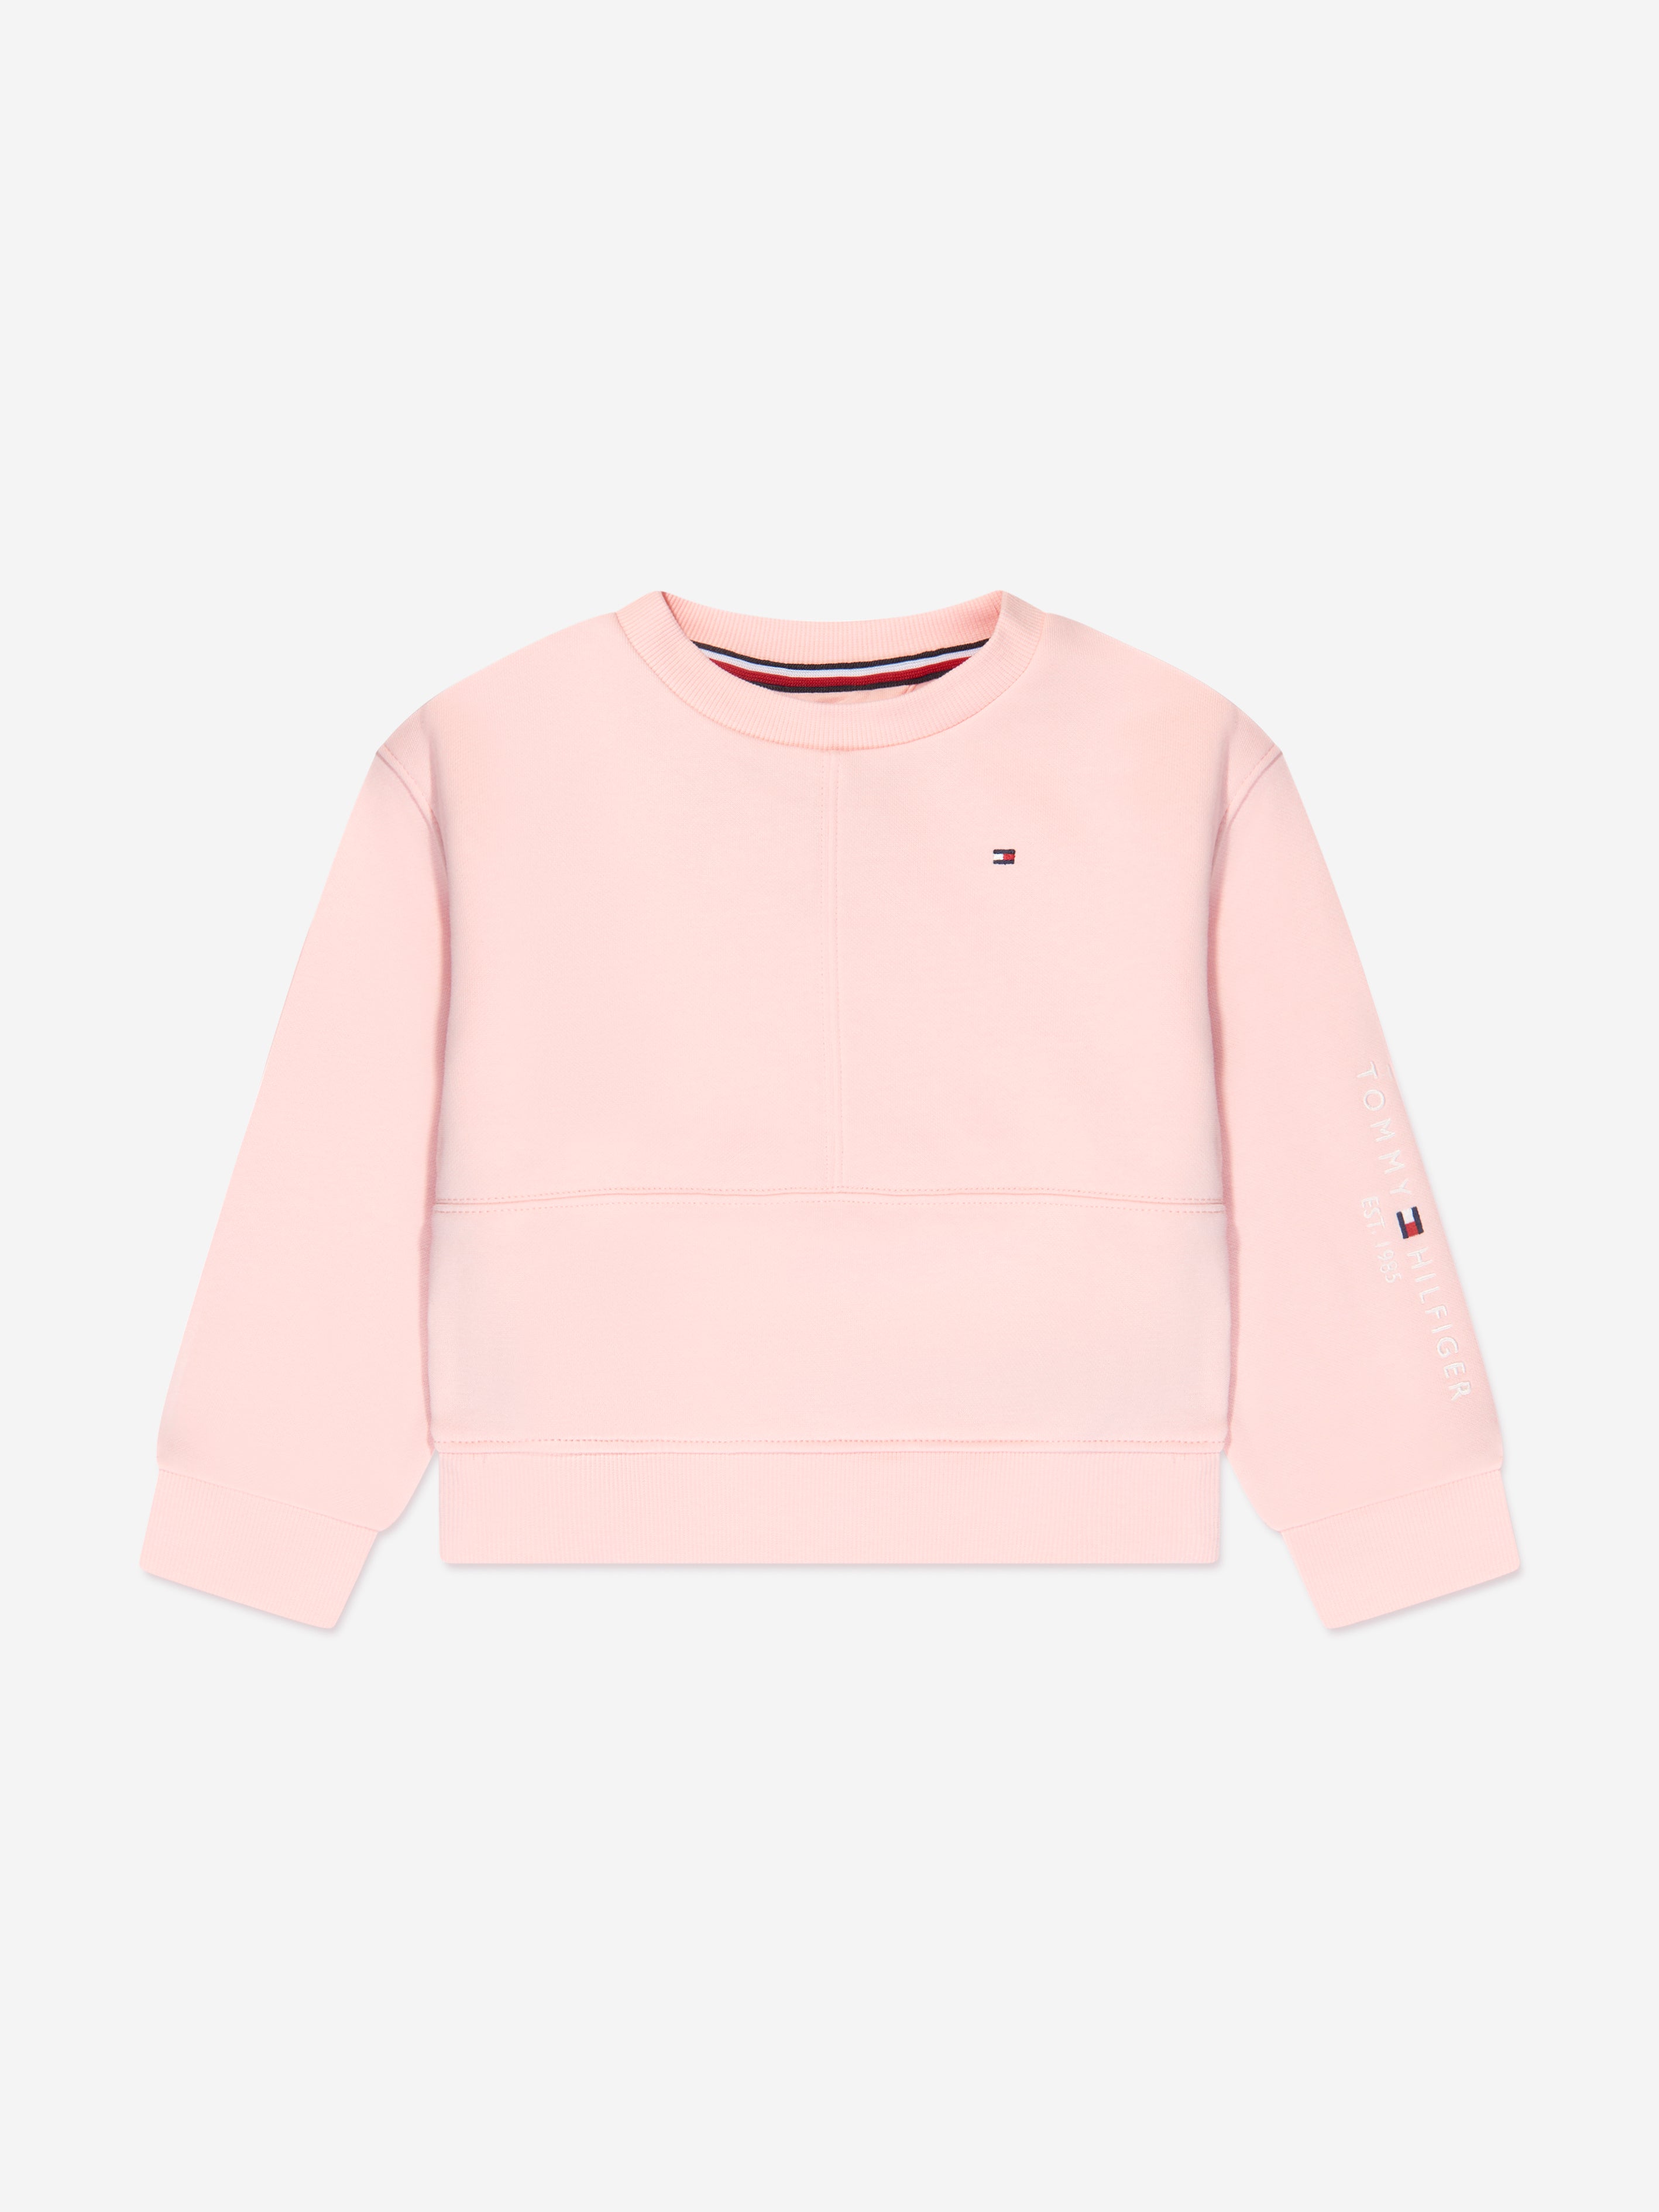 Girls Essential Sweatshirt in Childsplay Pink Clothing 